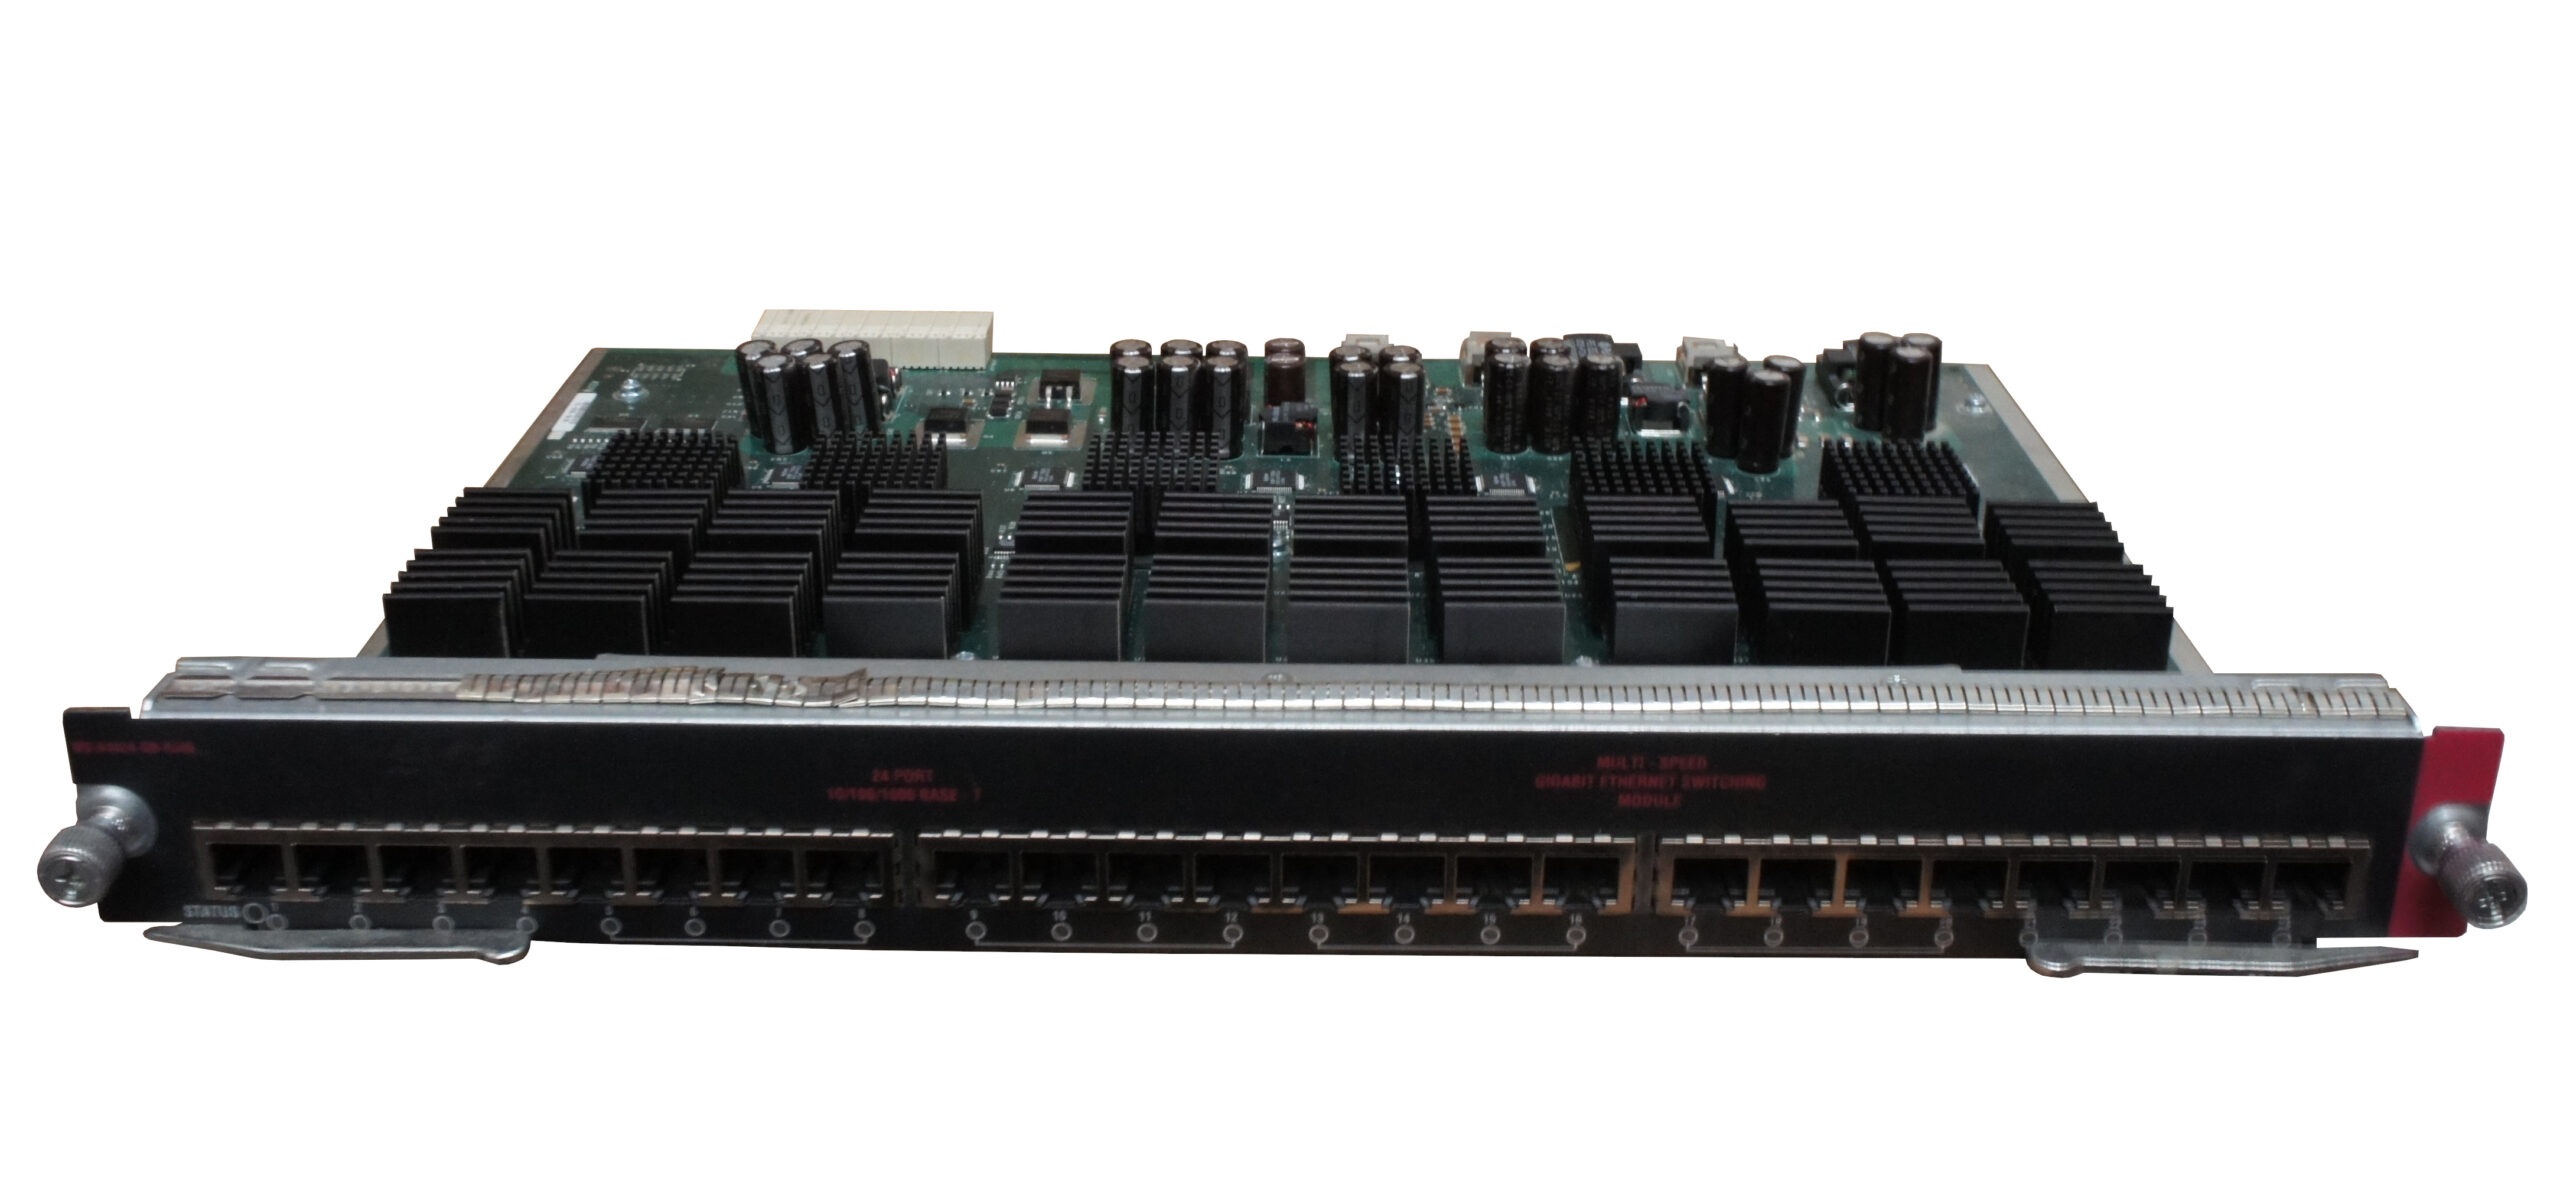 WS-X4424-GB-RJ45 - Cisco Multi Speed Gigabit Ethernet Switching Module - MF  Communications